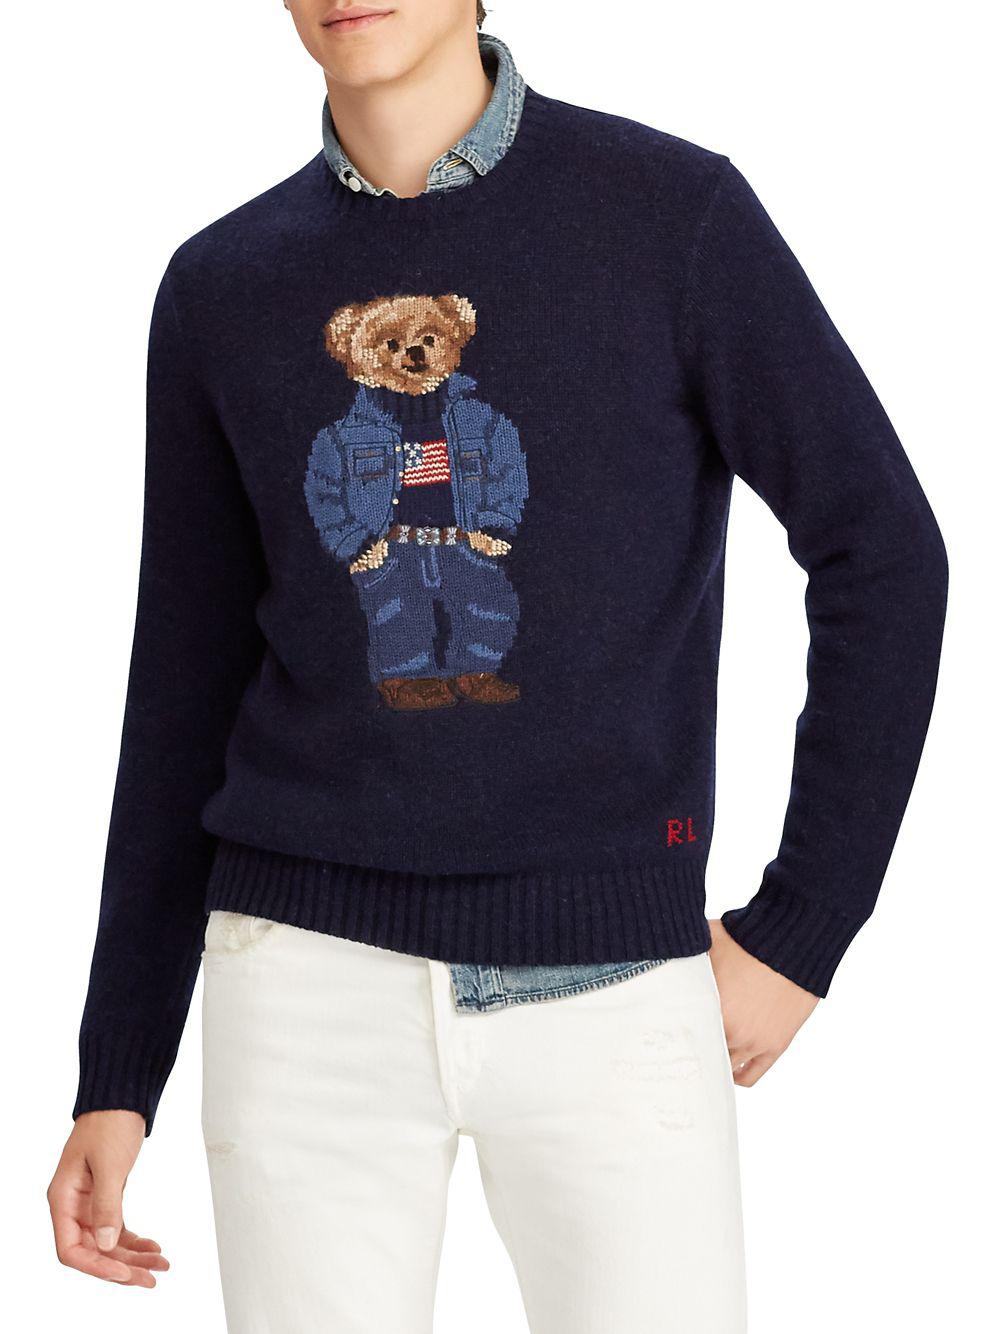 Polo Ralph Lauren Polo Bear Sweater in Blue for Men - Lyst